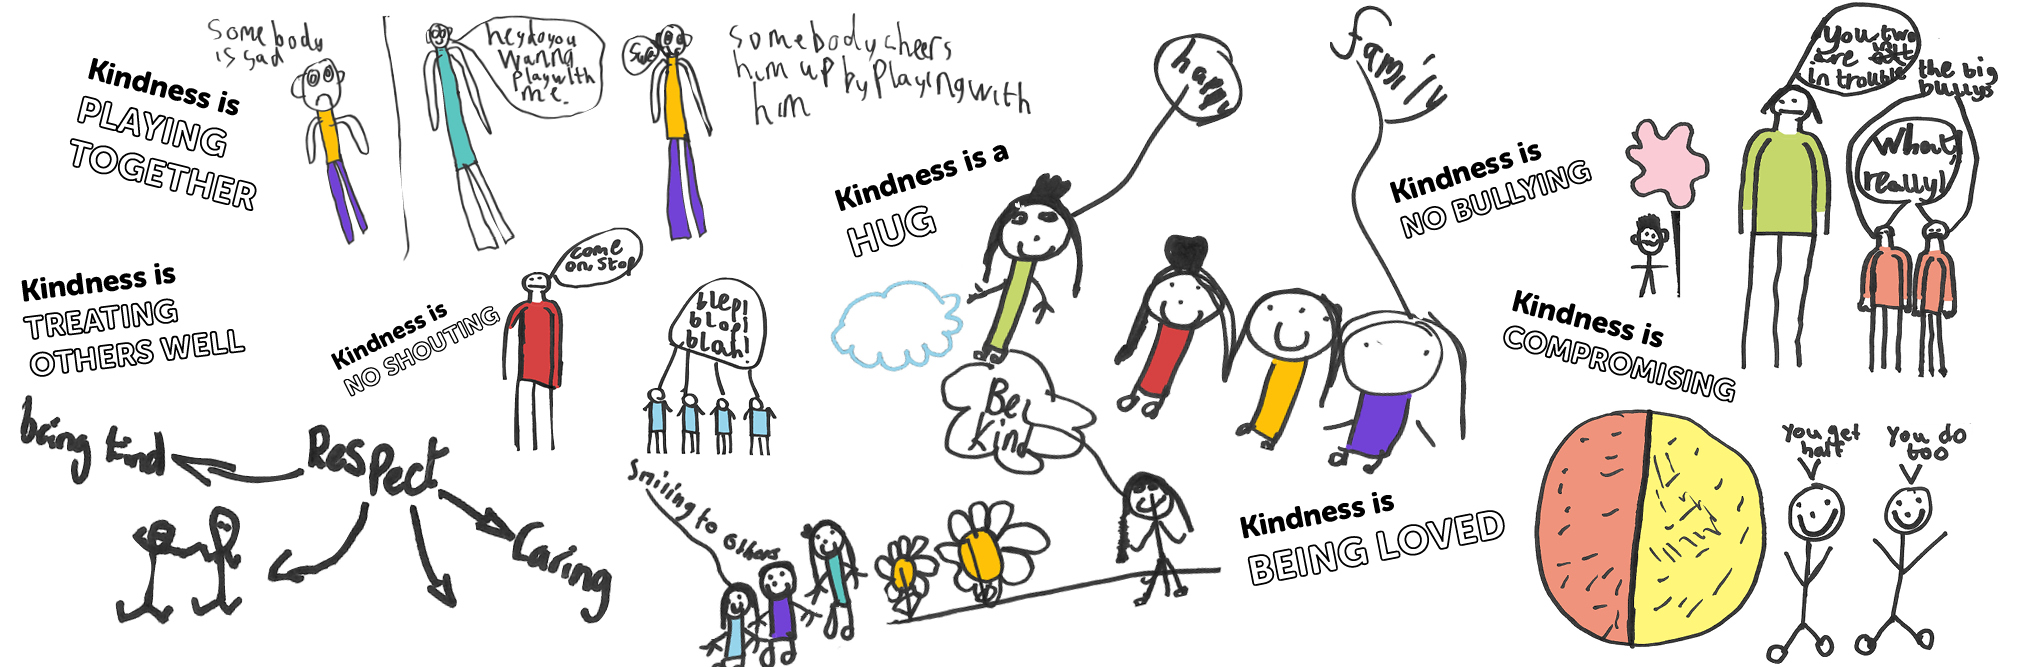 Imagining Aberdeen: Kindness is...